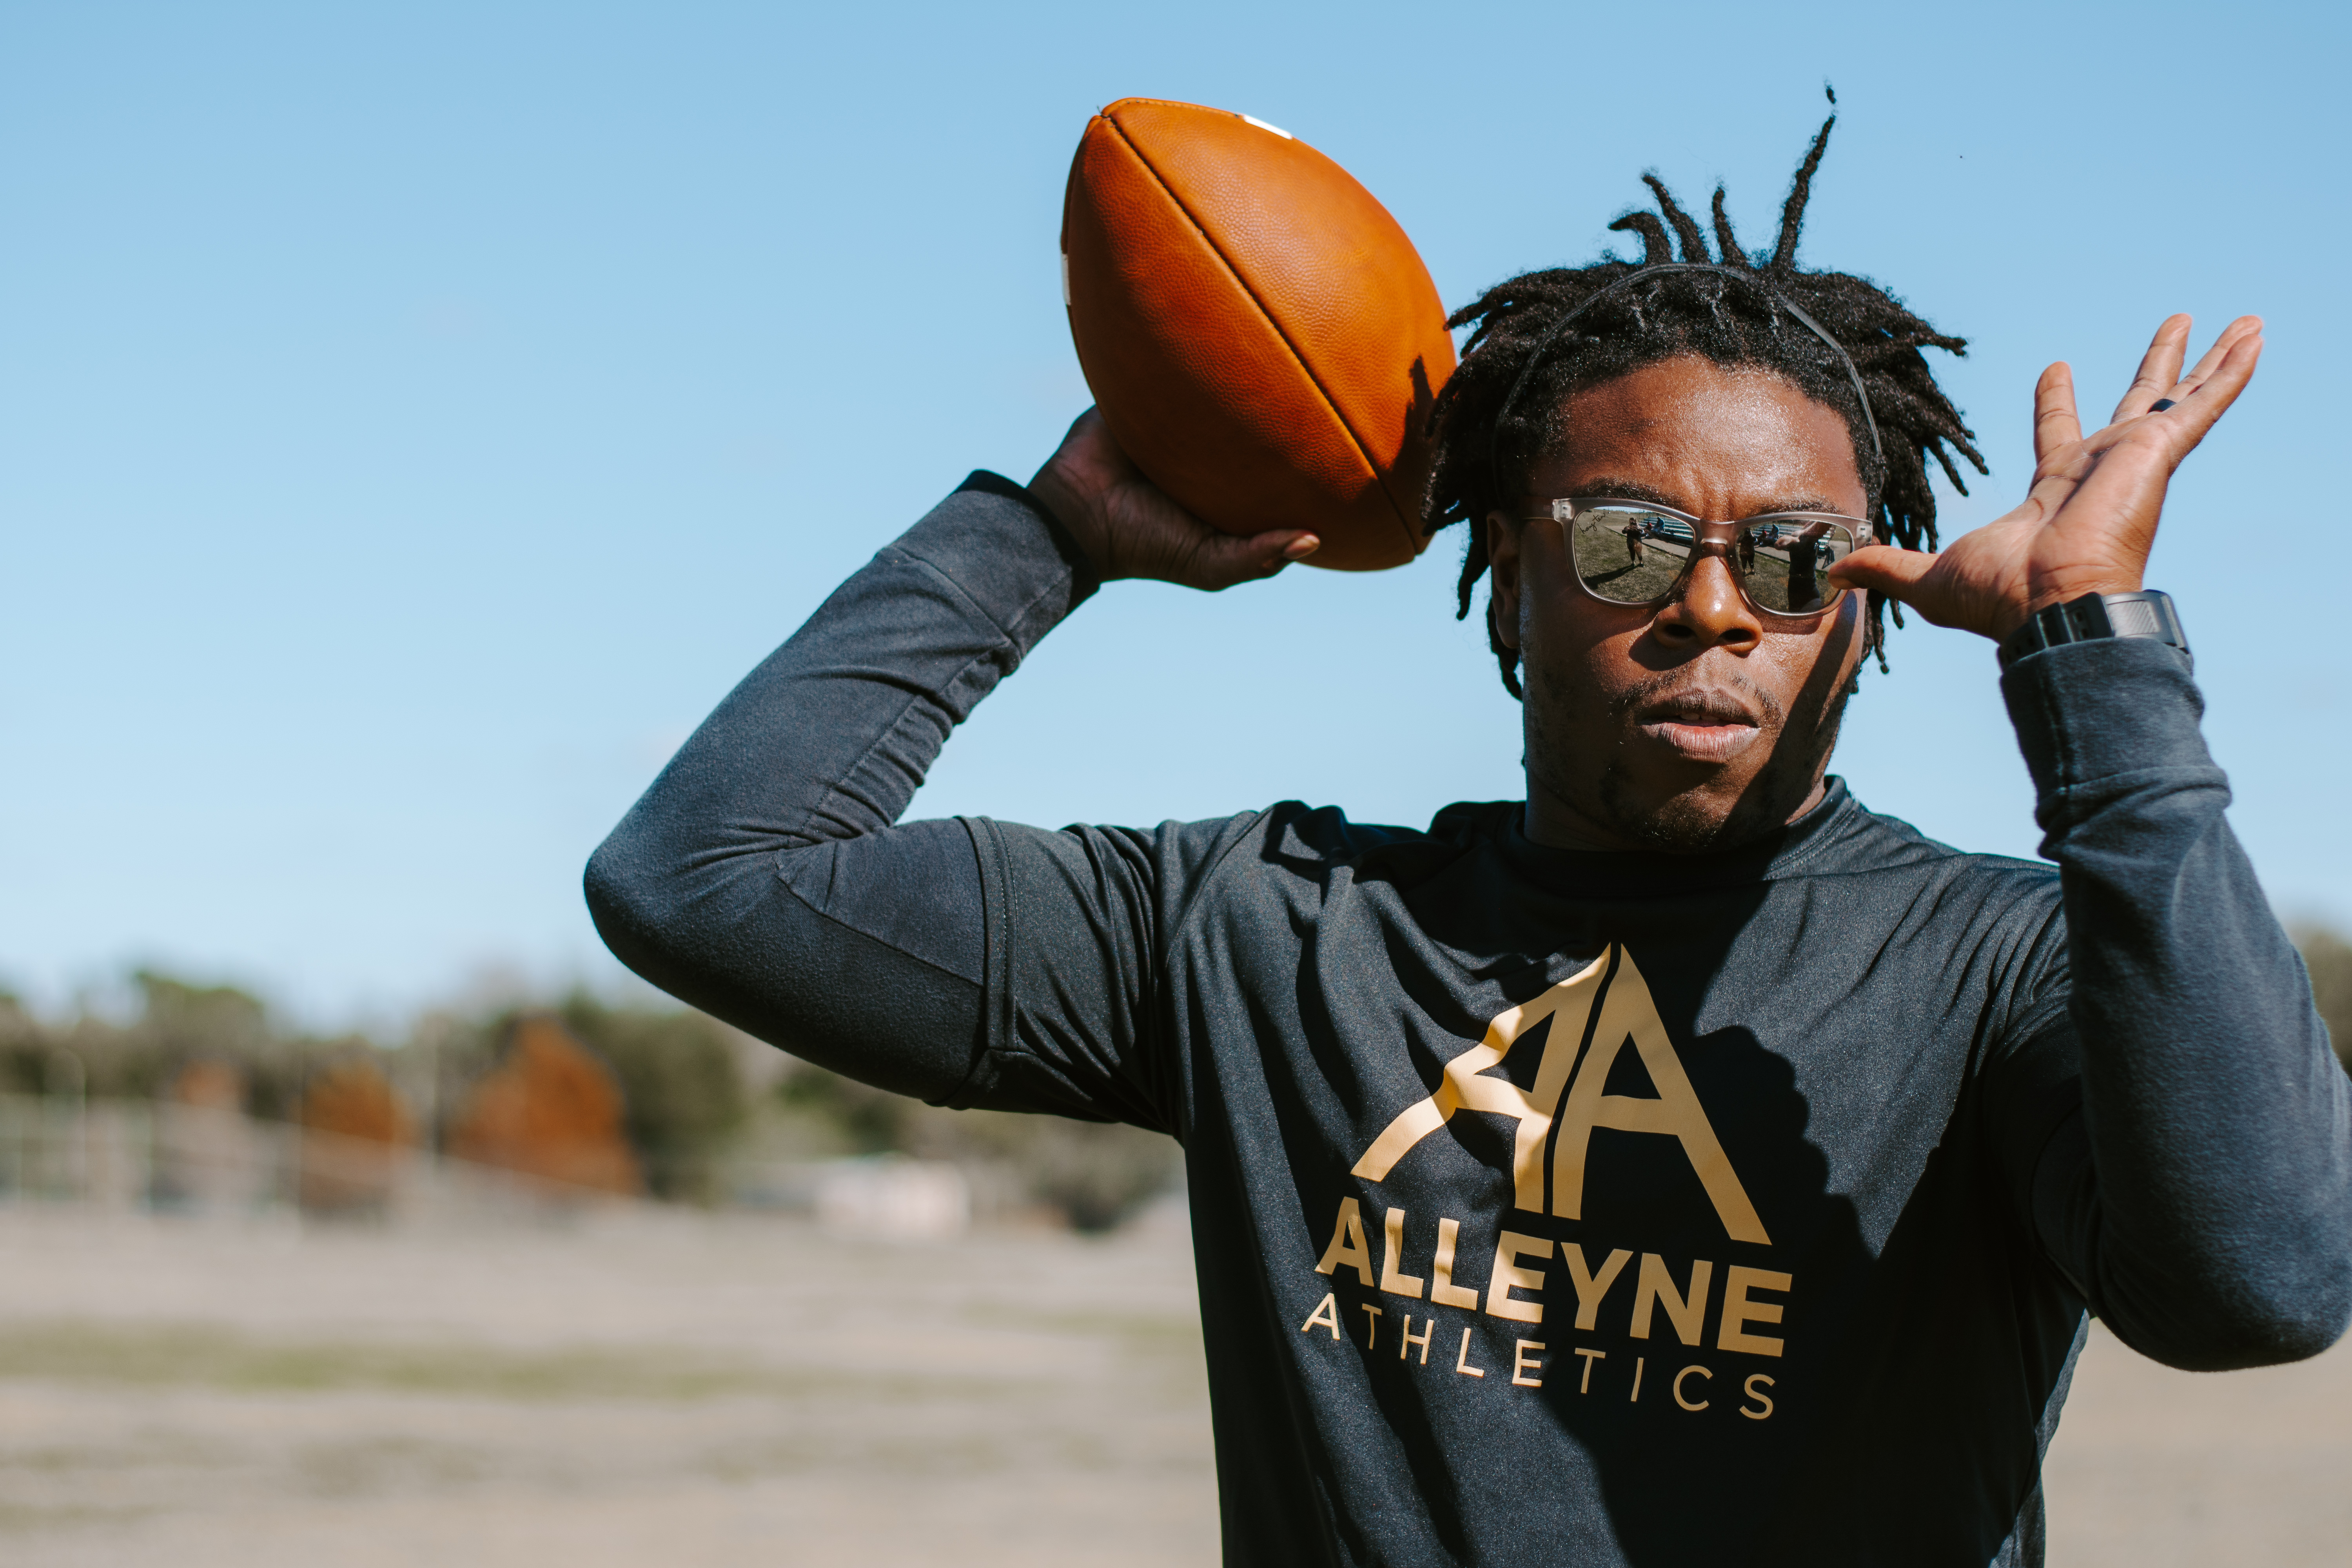 Alleyne Athletics Photo Gallery